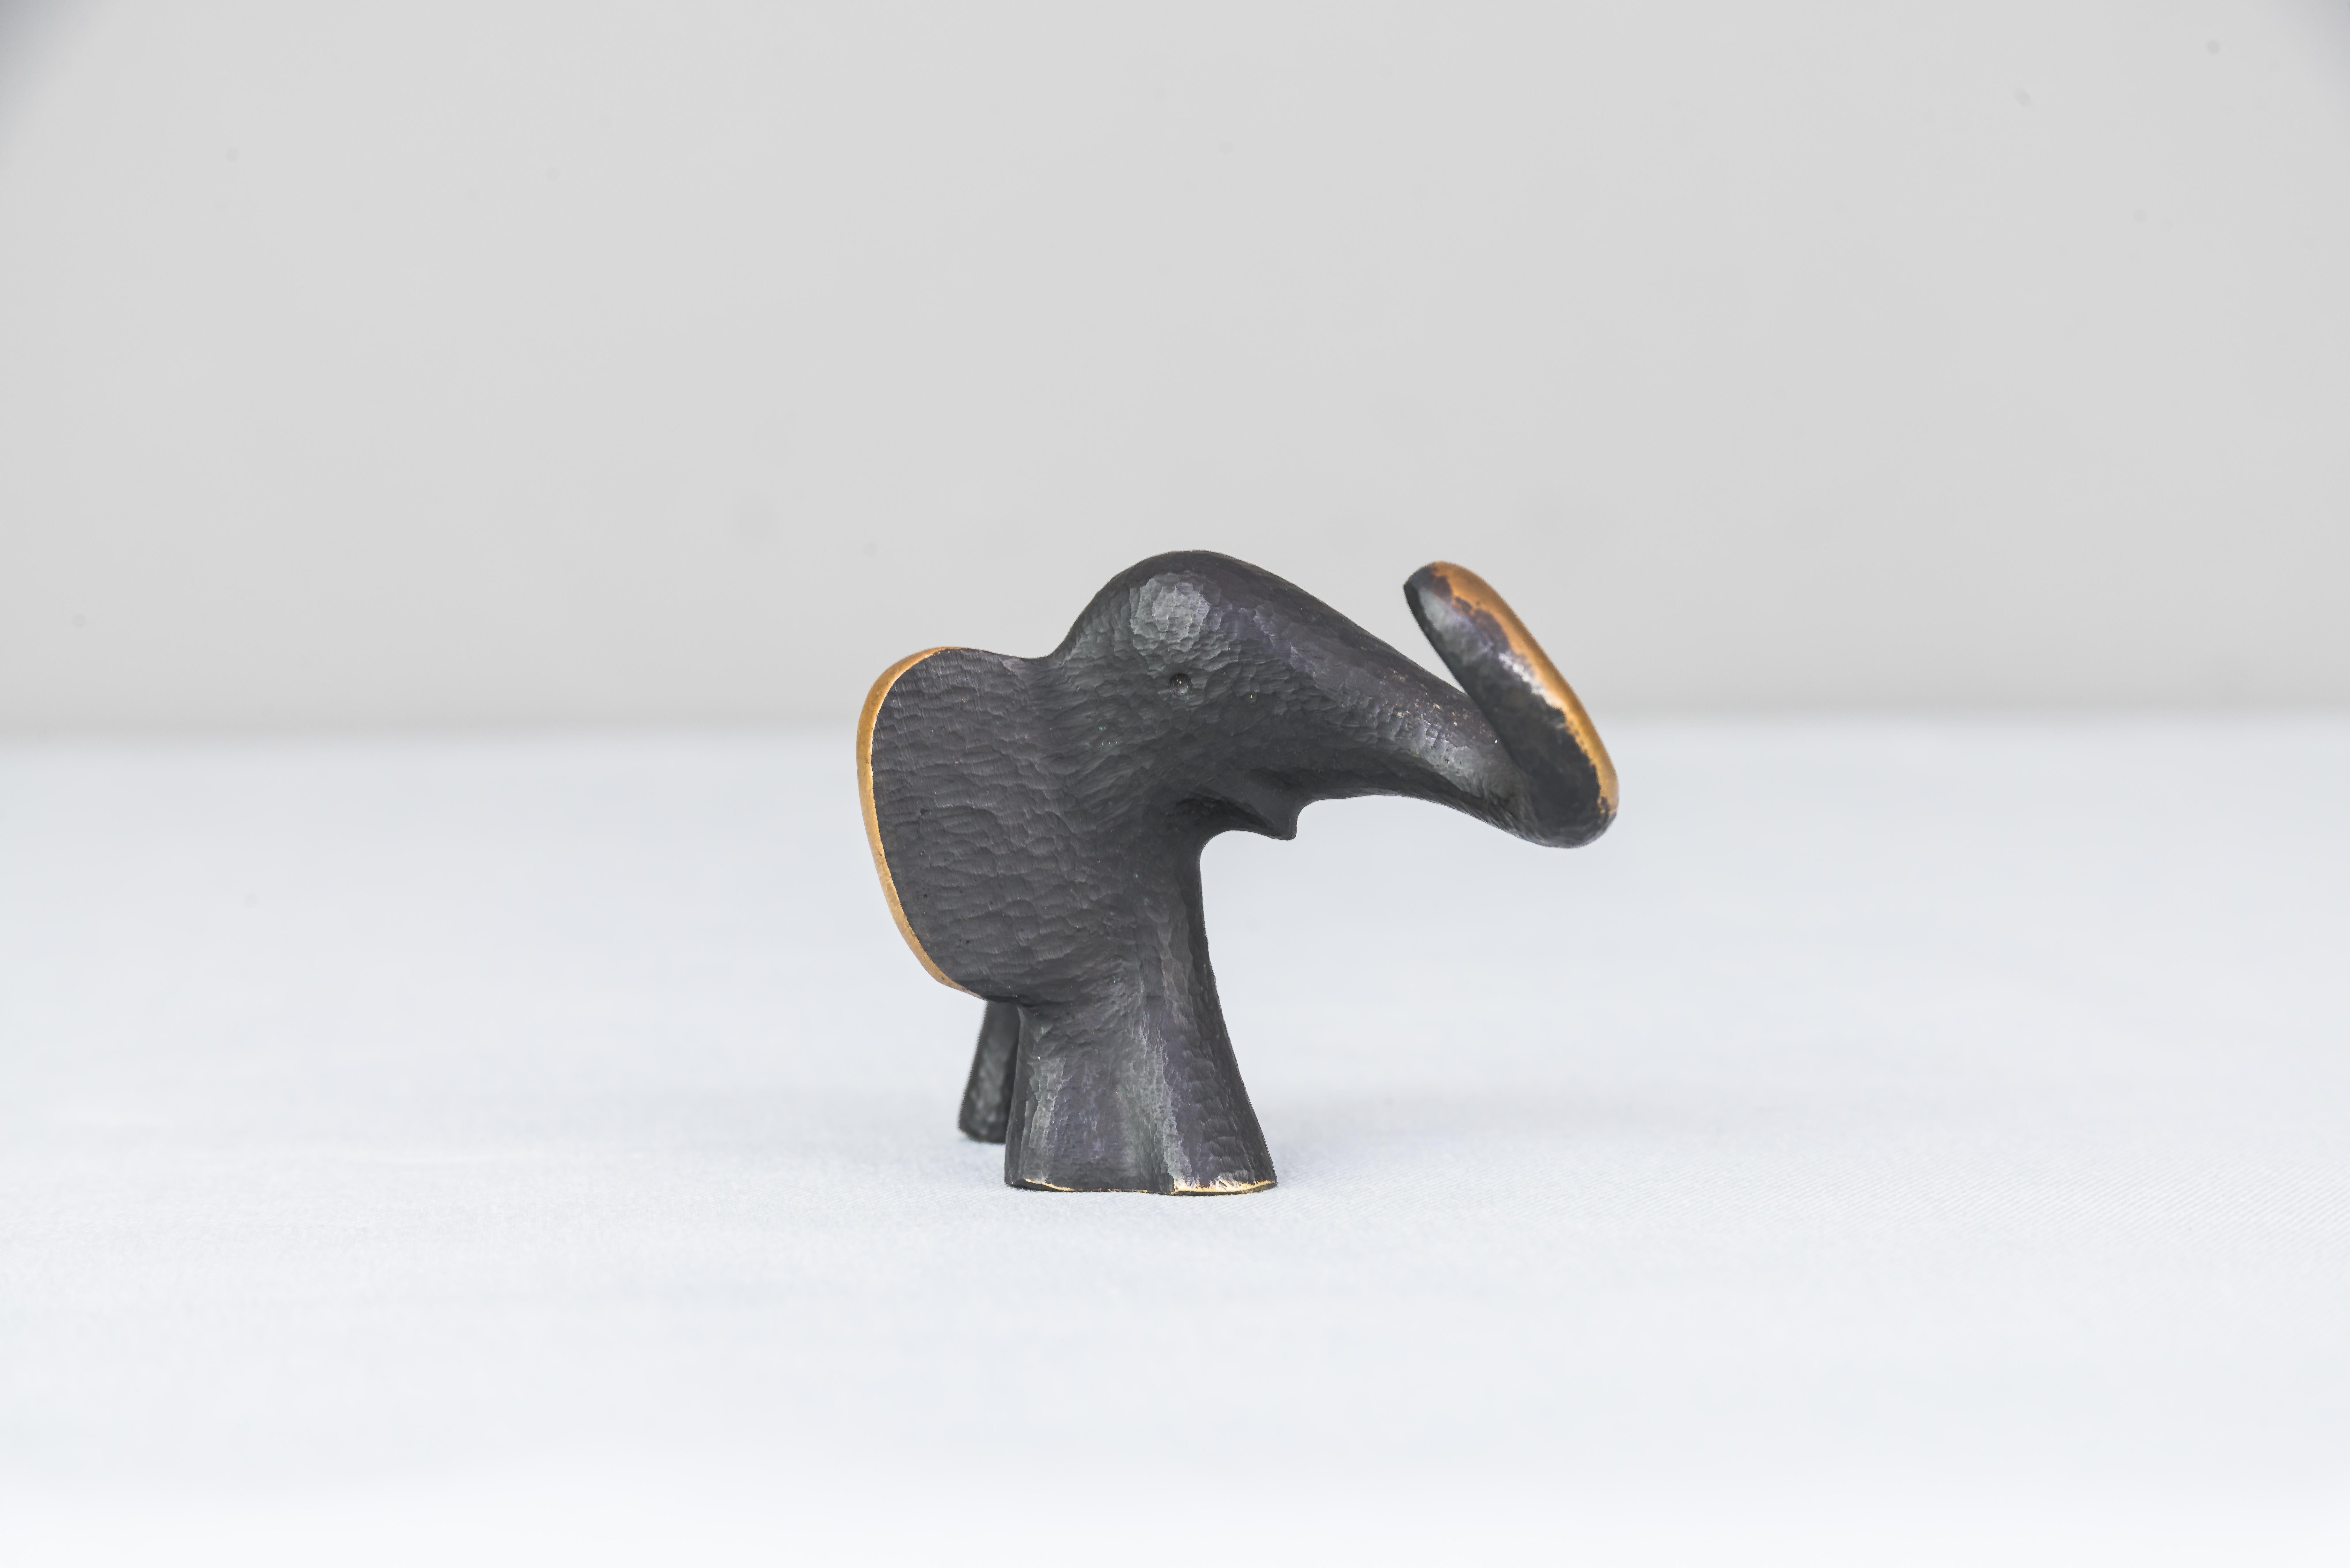 Elephant ring holder figurine by Herha Baller
Original condition.